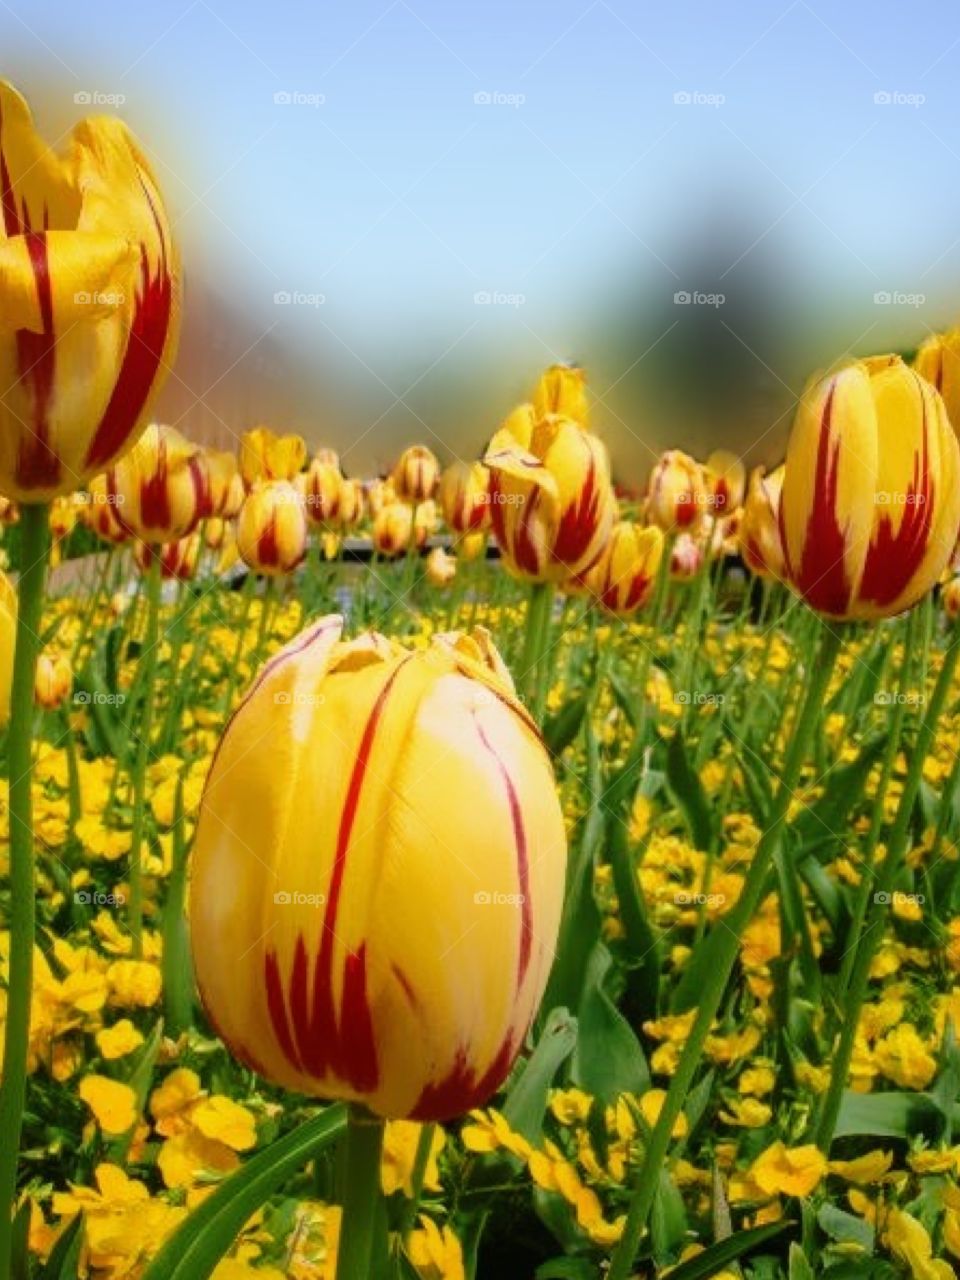 Field of yellow tulips